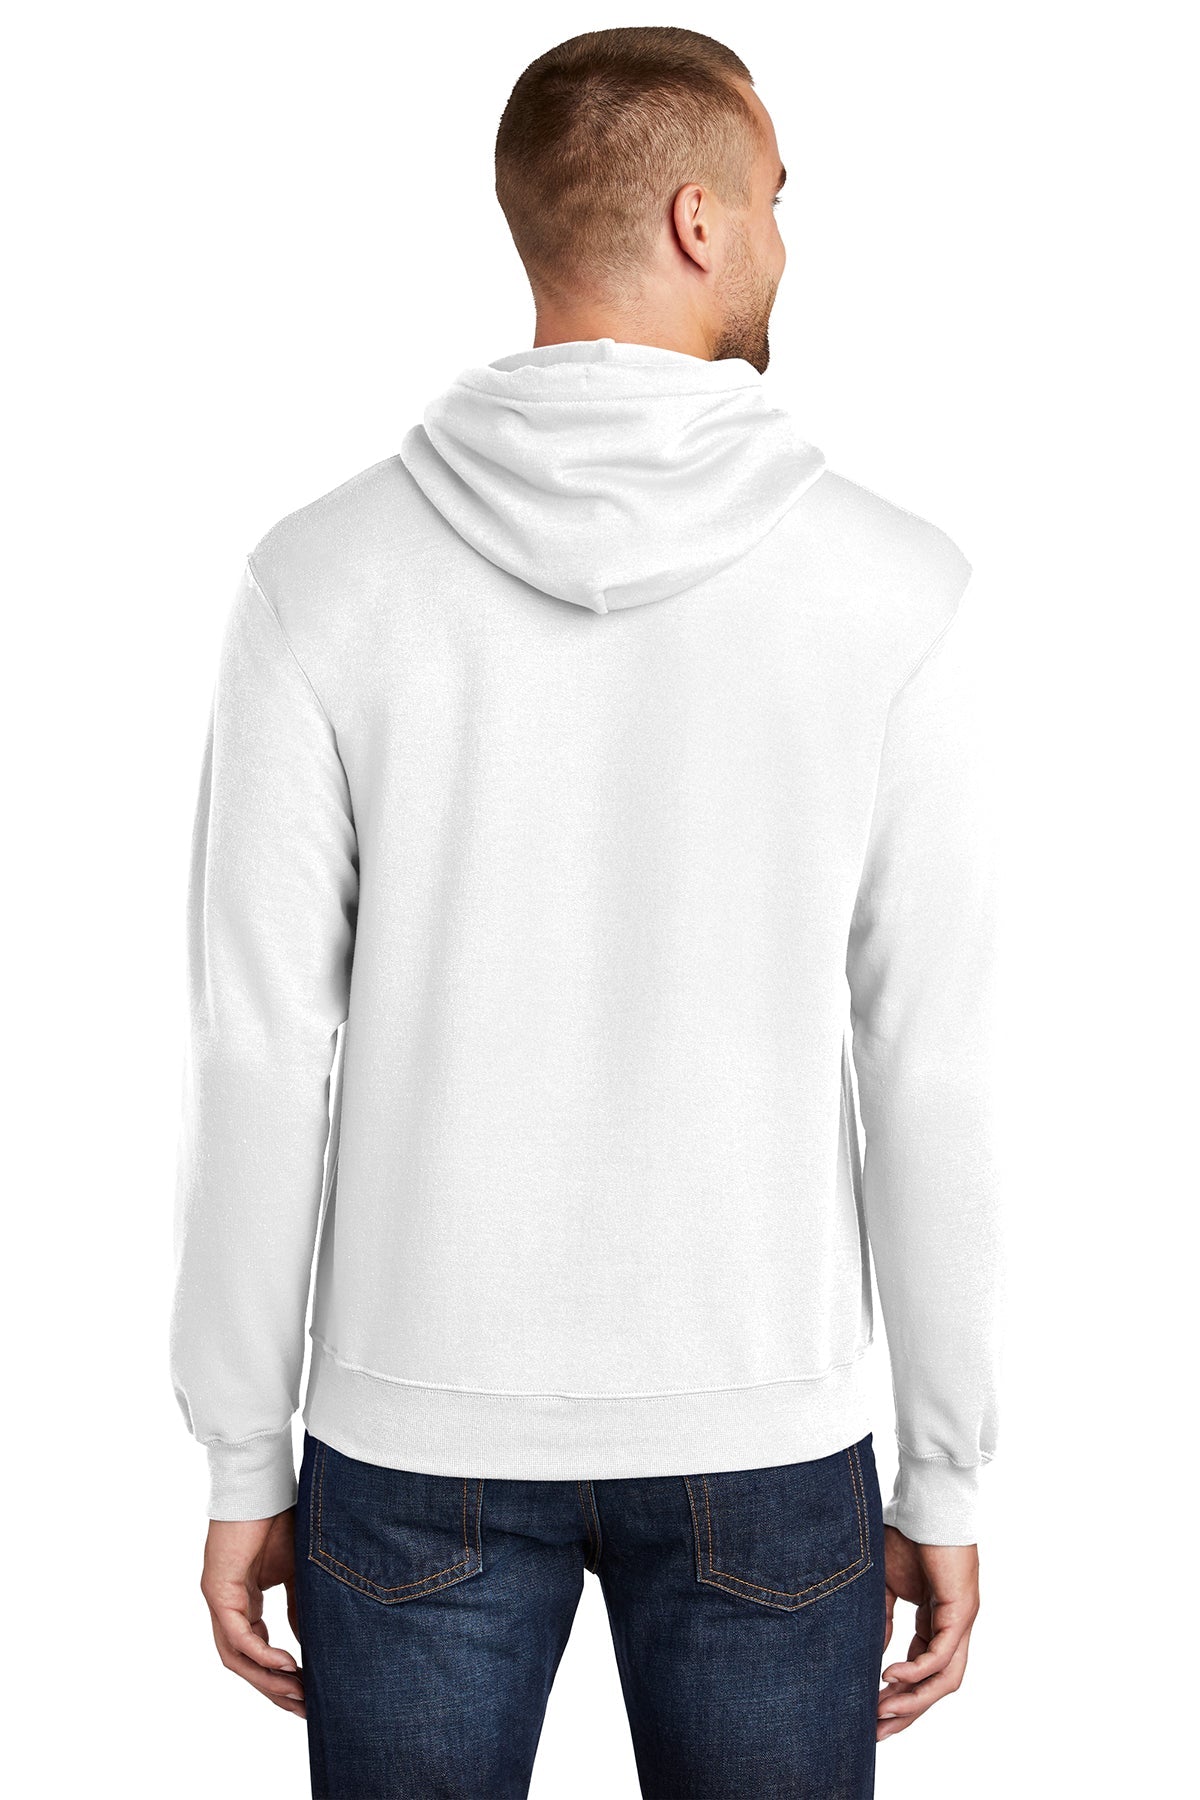 Port & Company Tall Core Fleece Pullover Hooded Sweatshirt PC78HT White